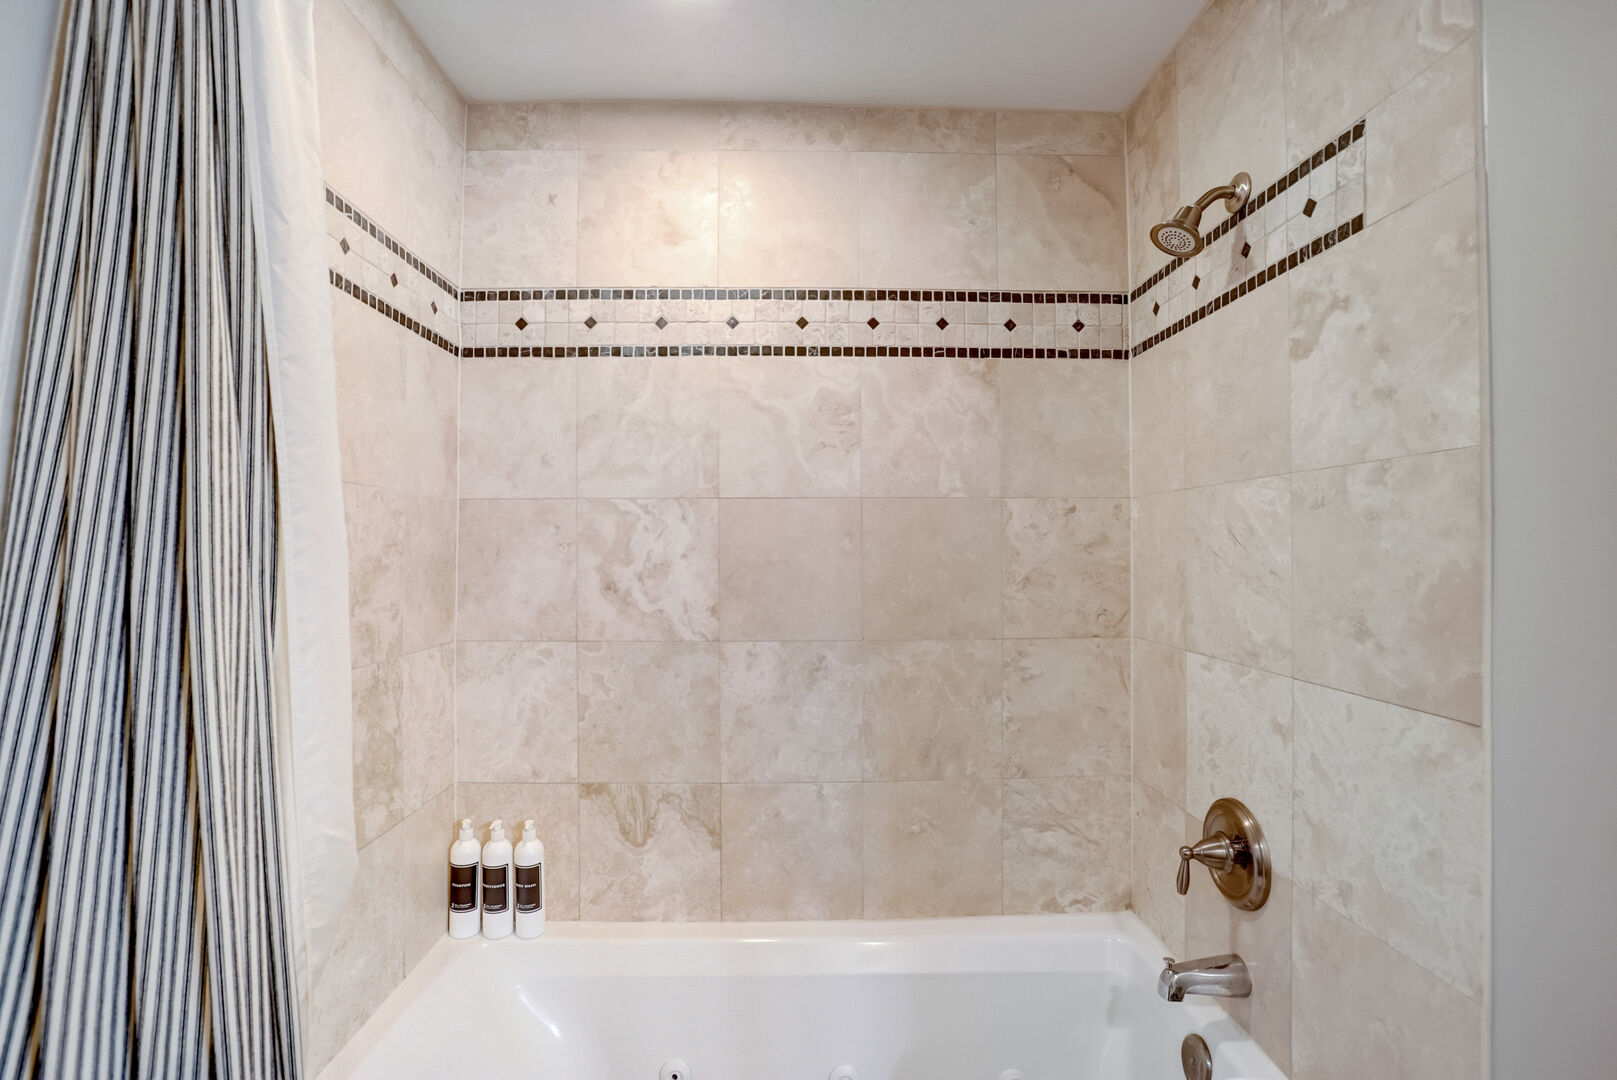 Bathroom 2 (Ensuite for Bedroom 2) - Jetted Bathtub/Shower Combo